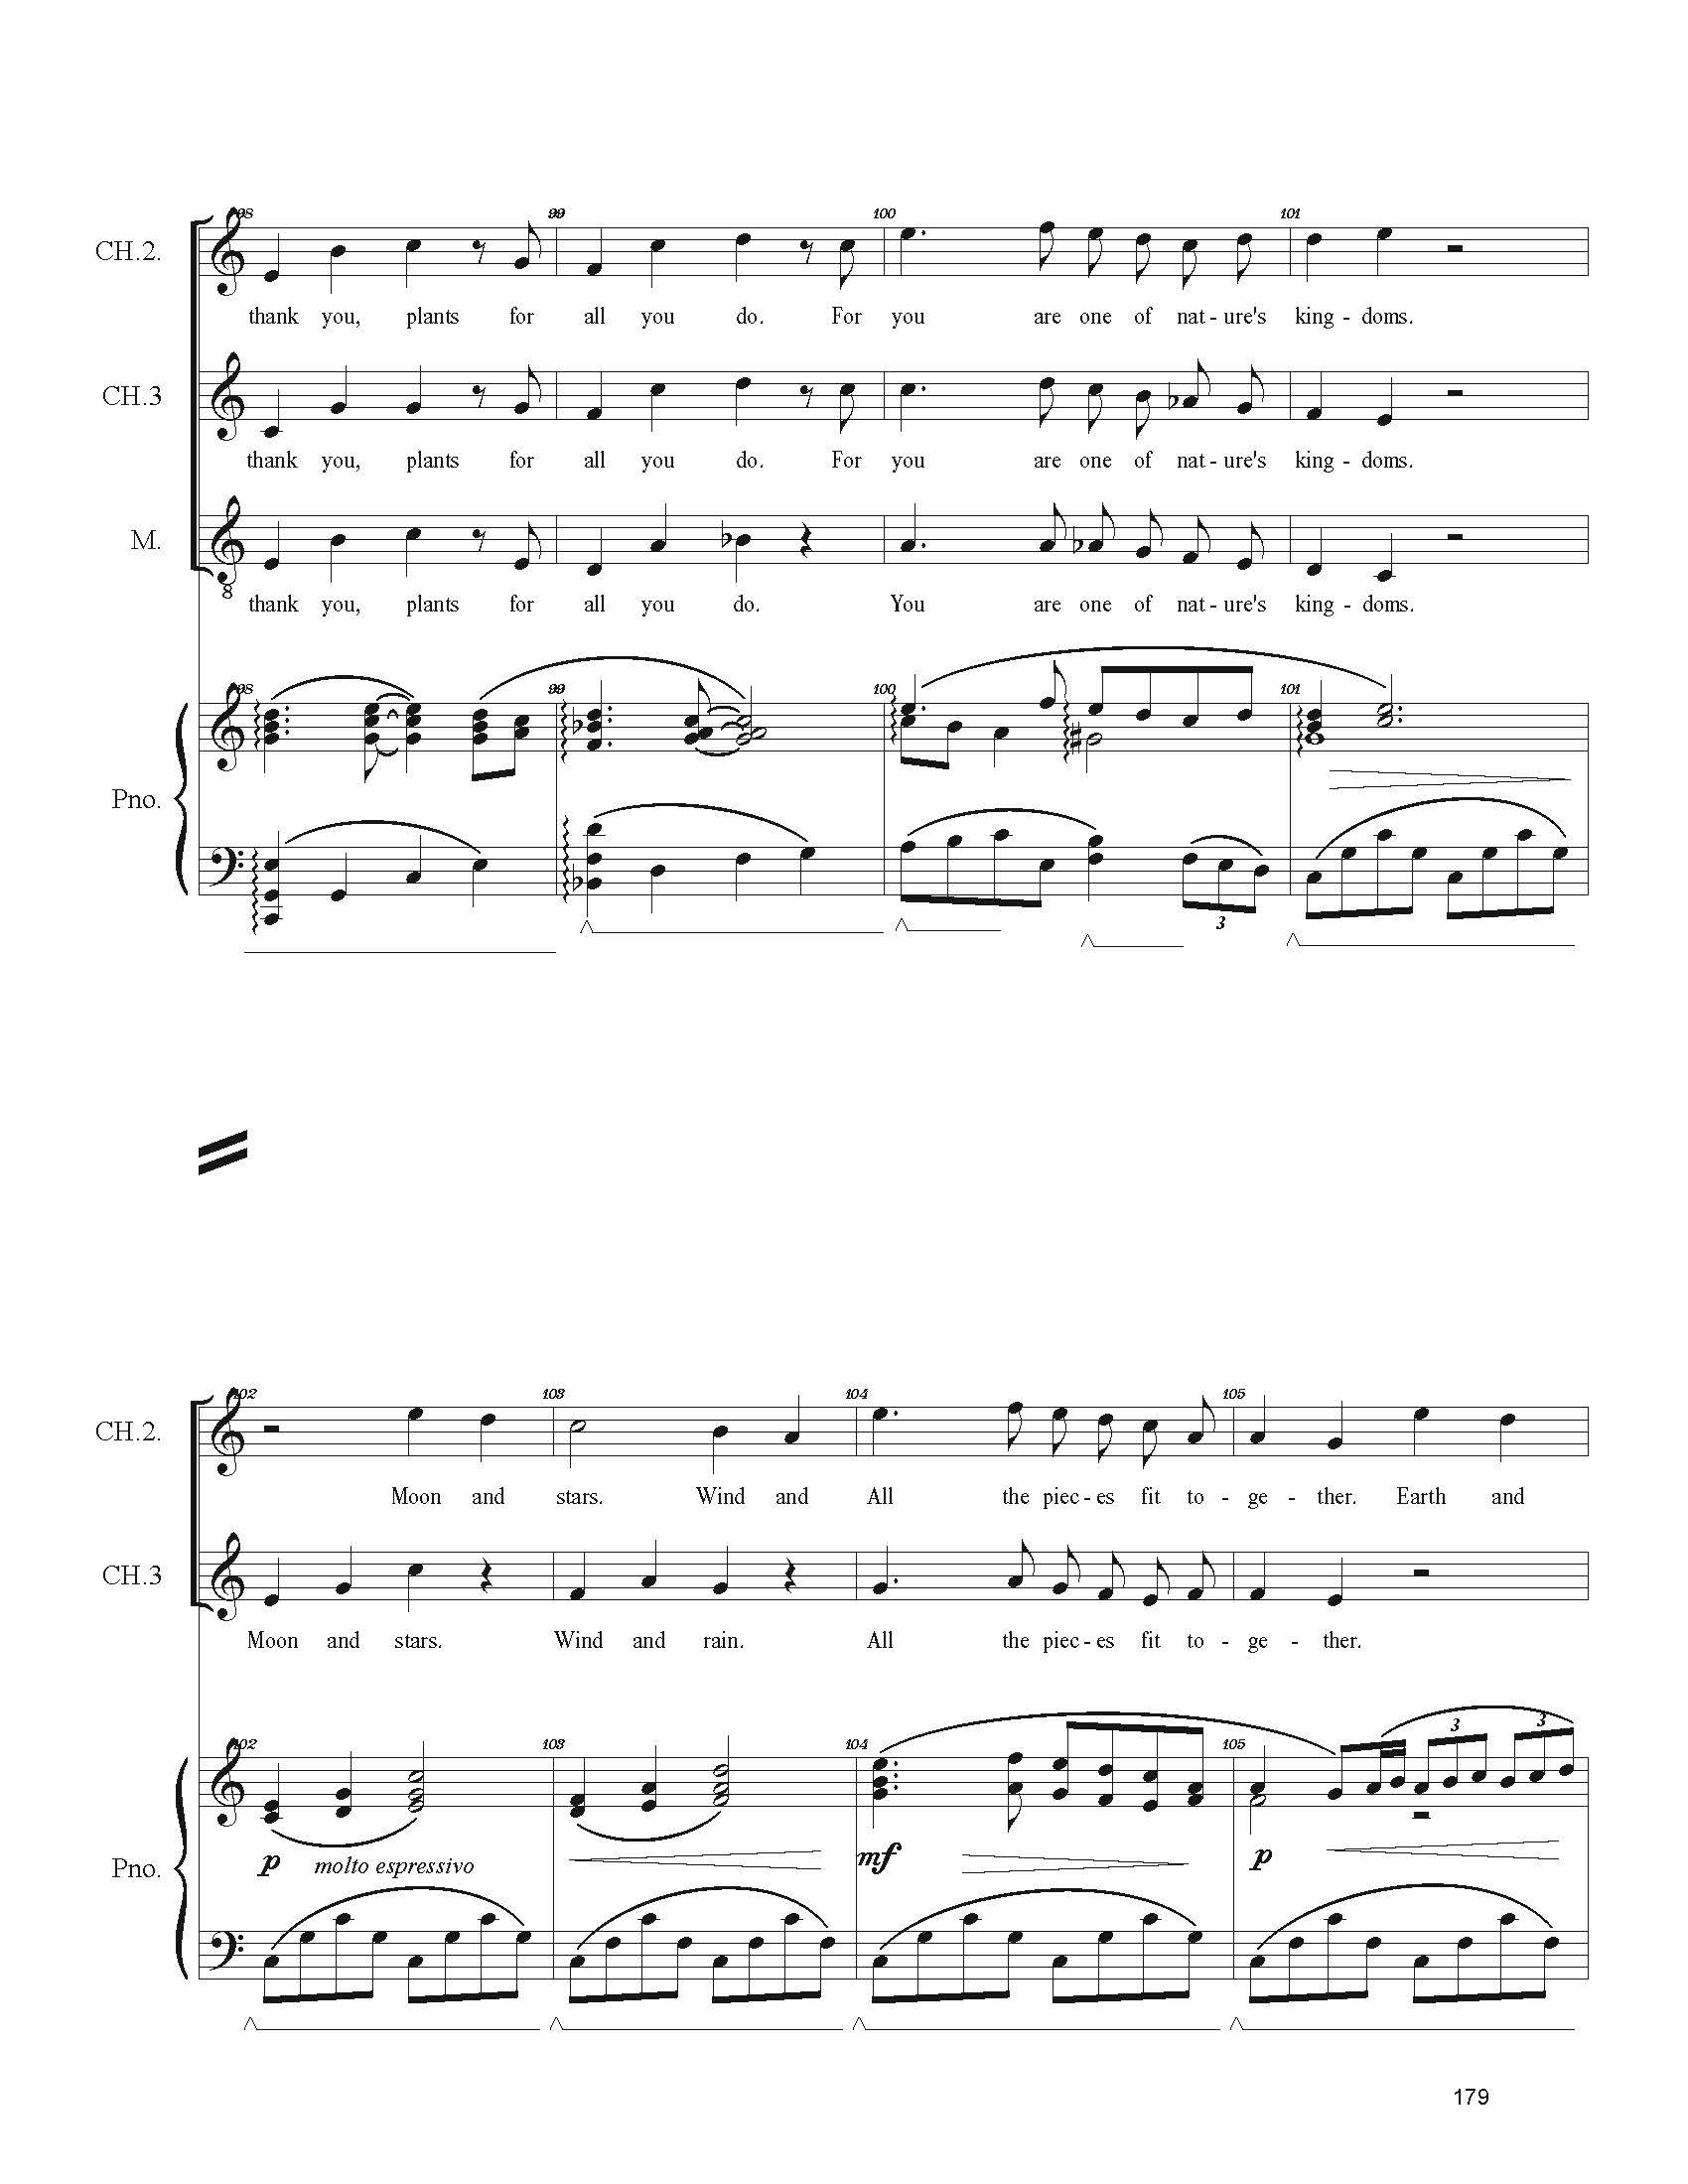 FULL PIANO VOCAL SCORE DRAFT 1 - Score_Page_179.jpg